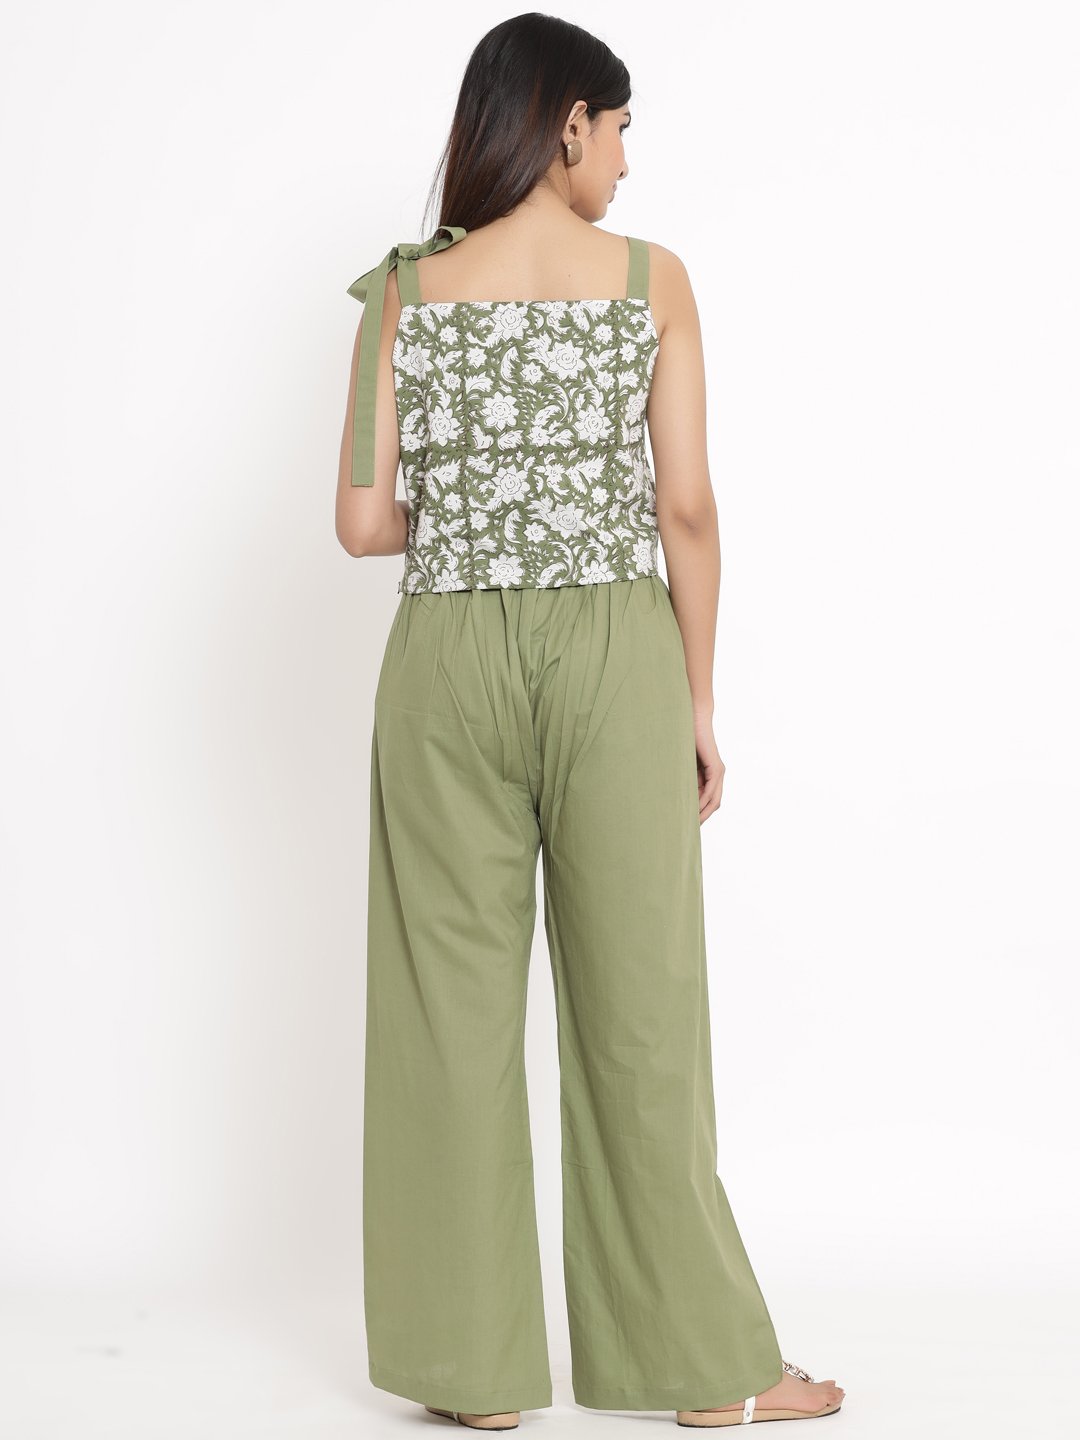 Women's Printed Cotton Fabric Crop Top & Palazzo Green Color - Kipek